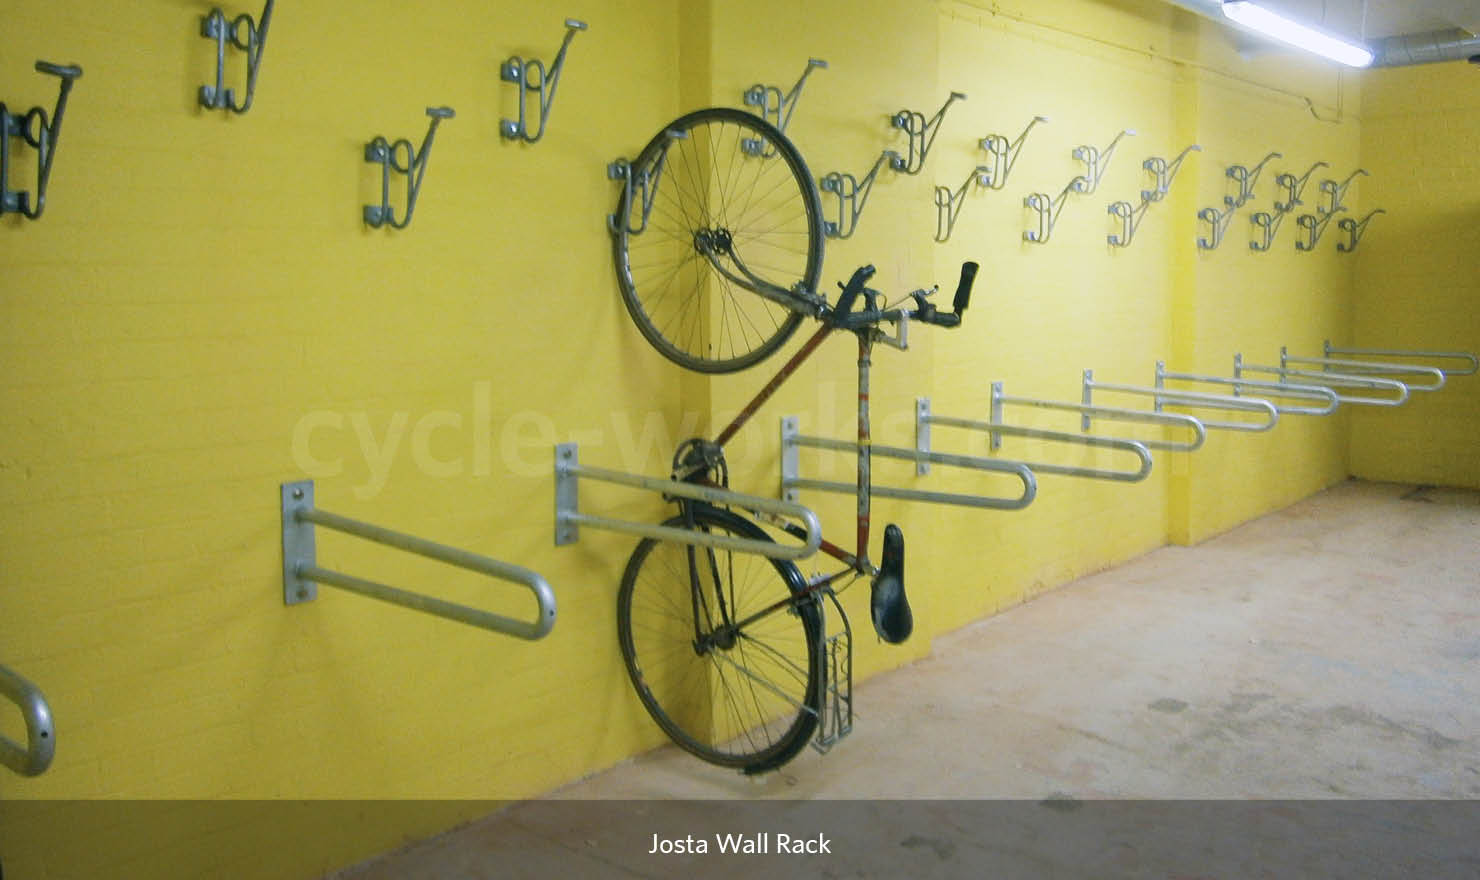 Josta Wall Rack